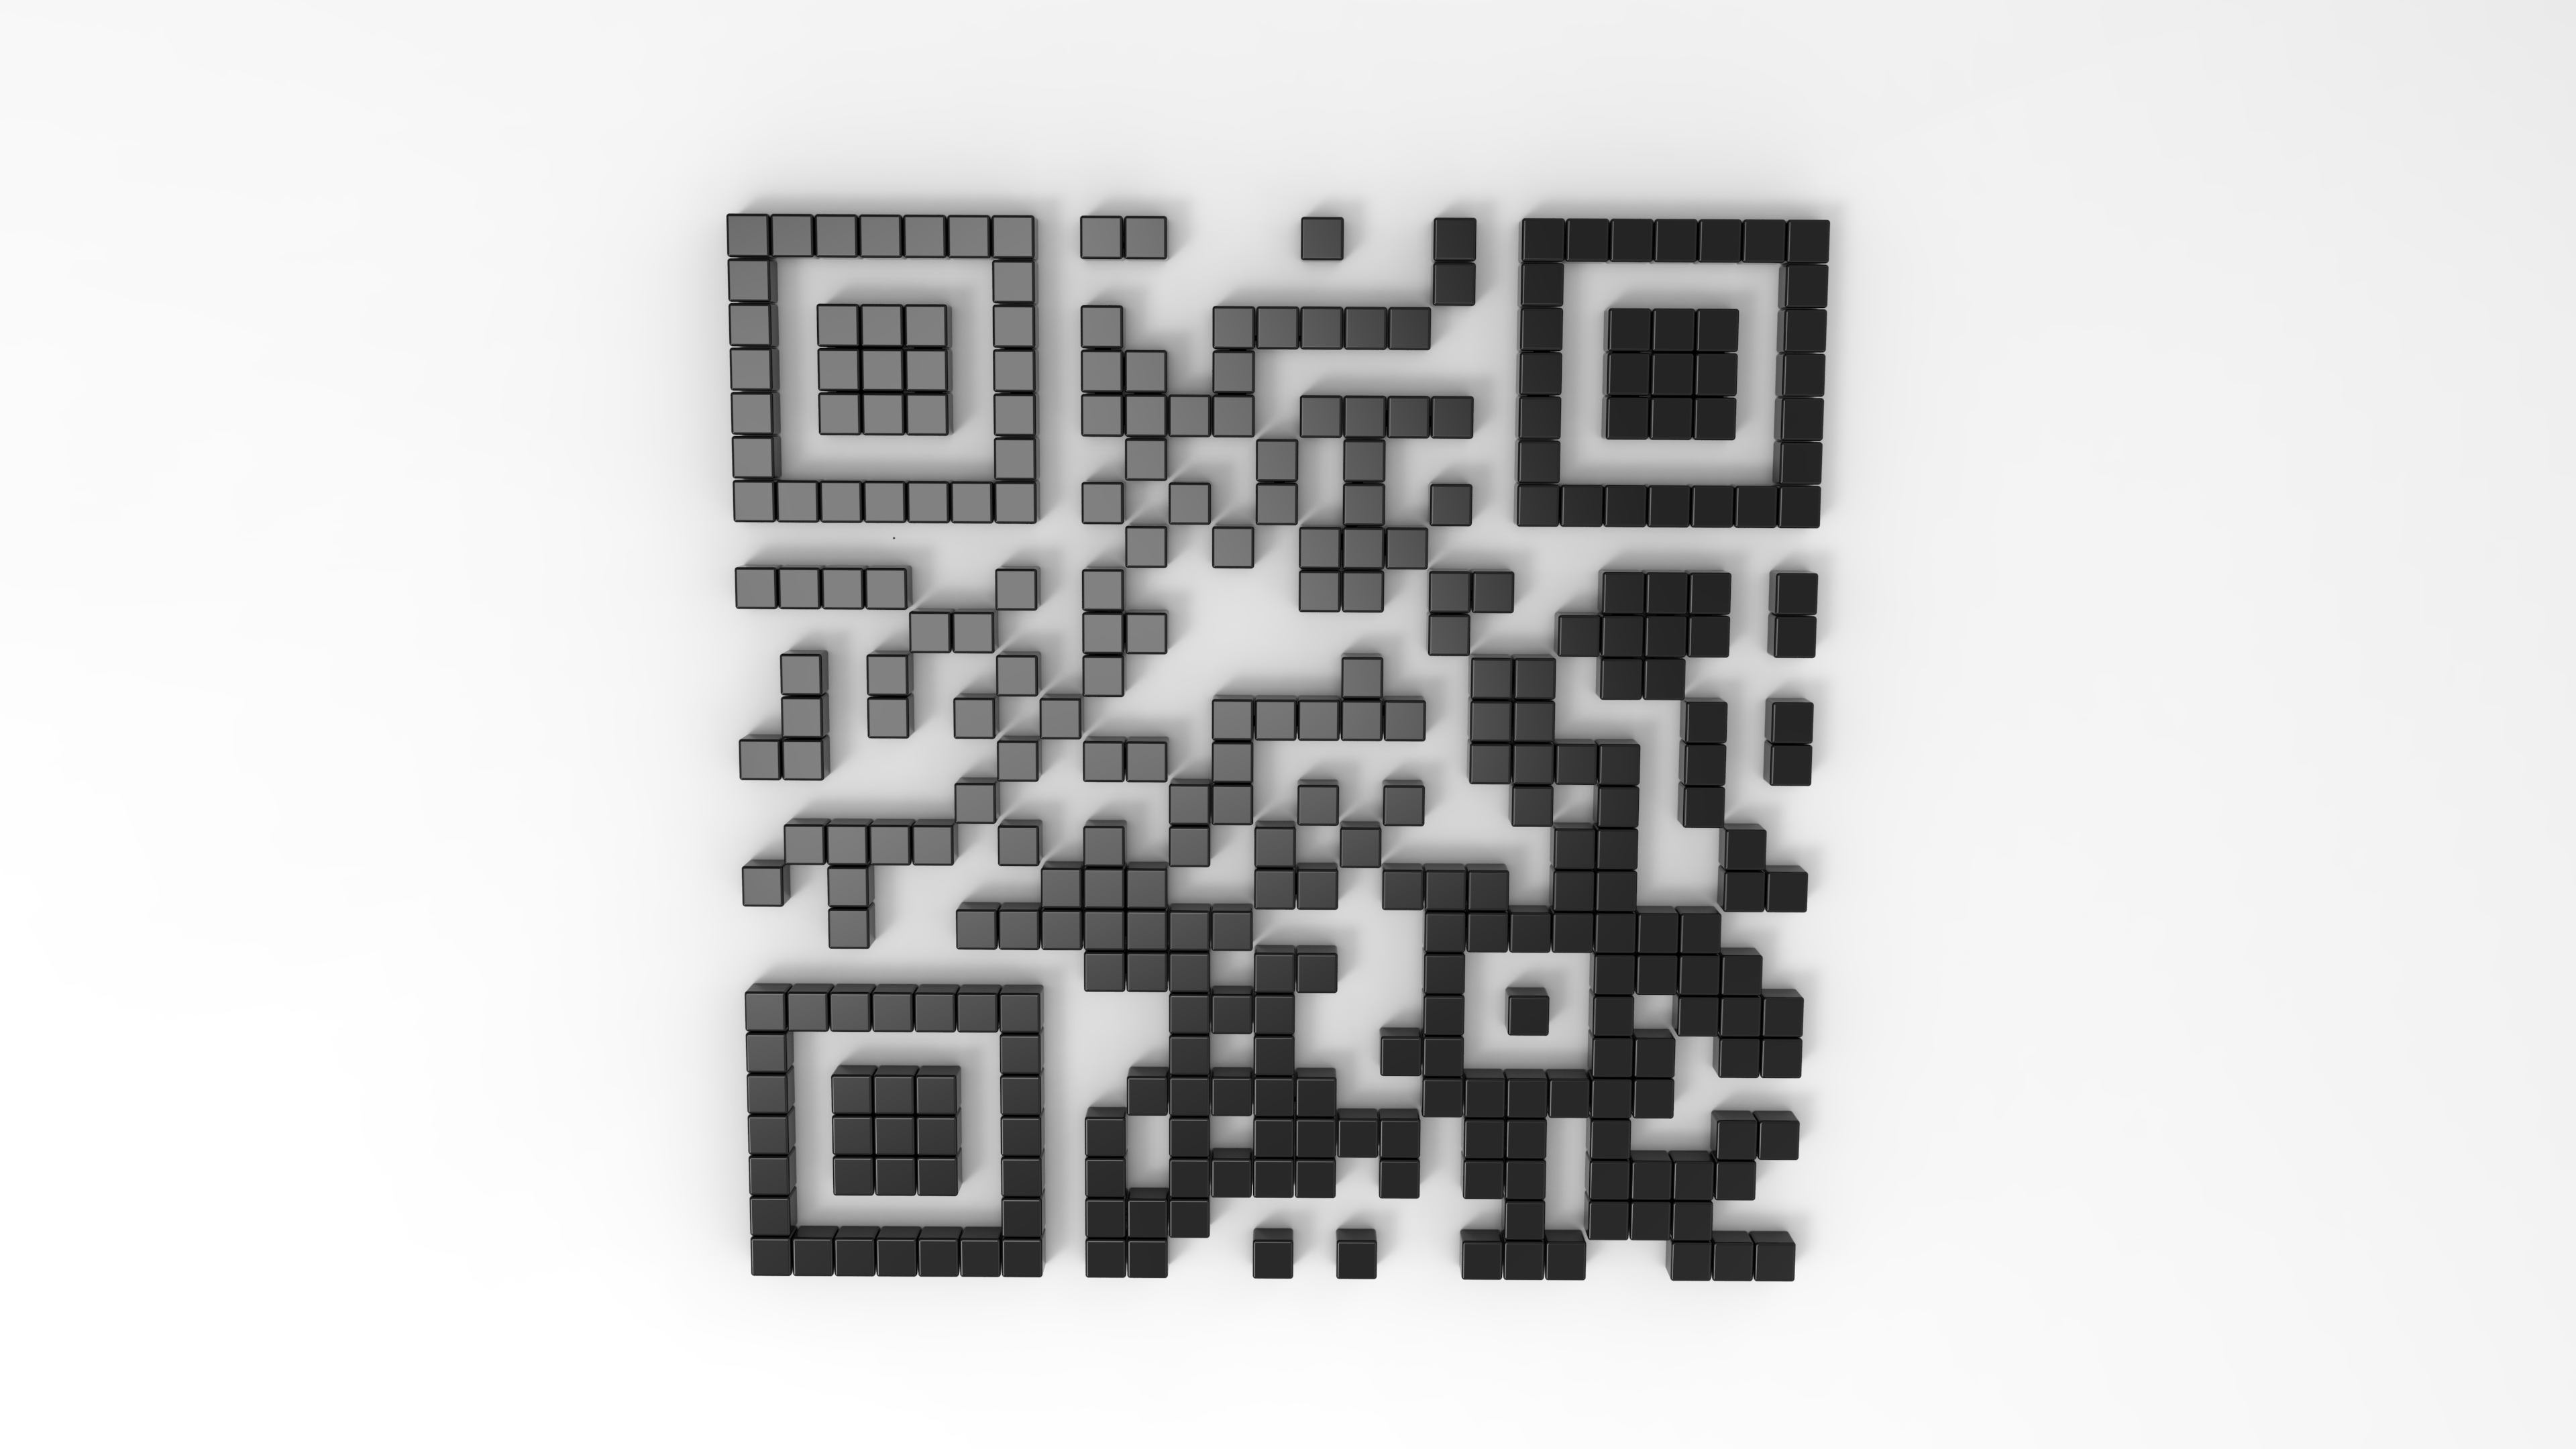 Qr код на бумаге. 3д QR код. D&S люстра с19450/2+2 QR код. Распечатка QR кодов. Куб с QR кодом.